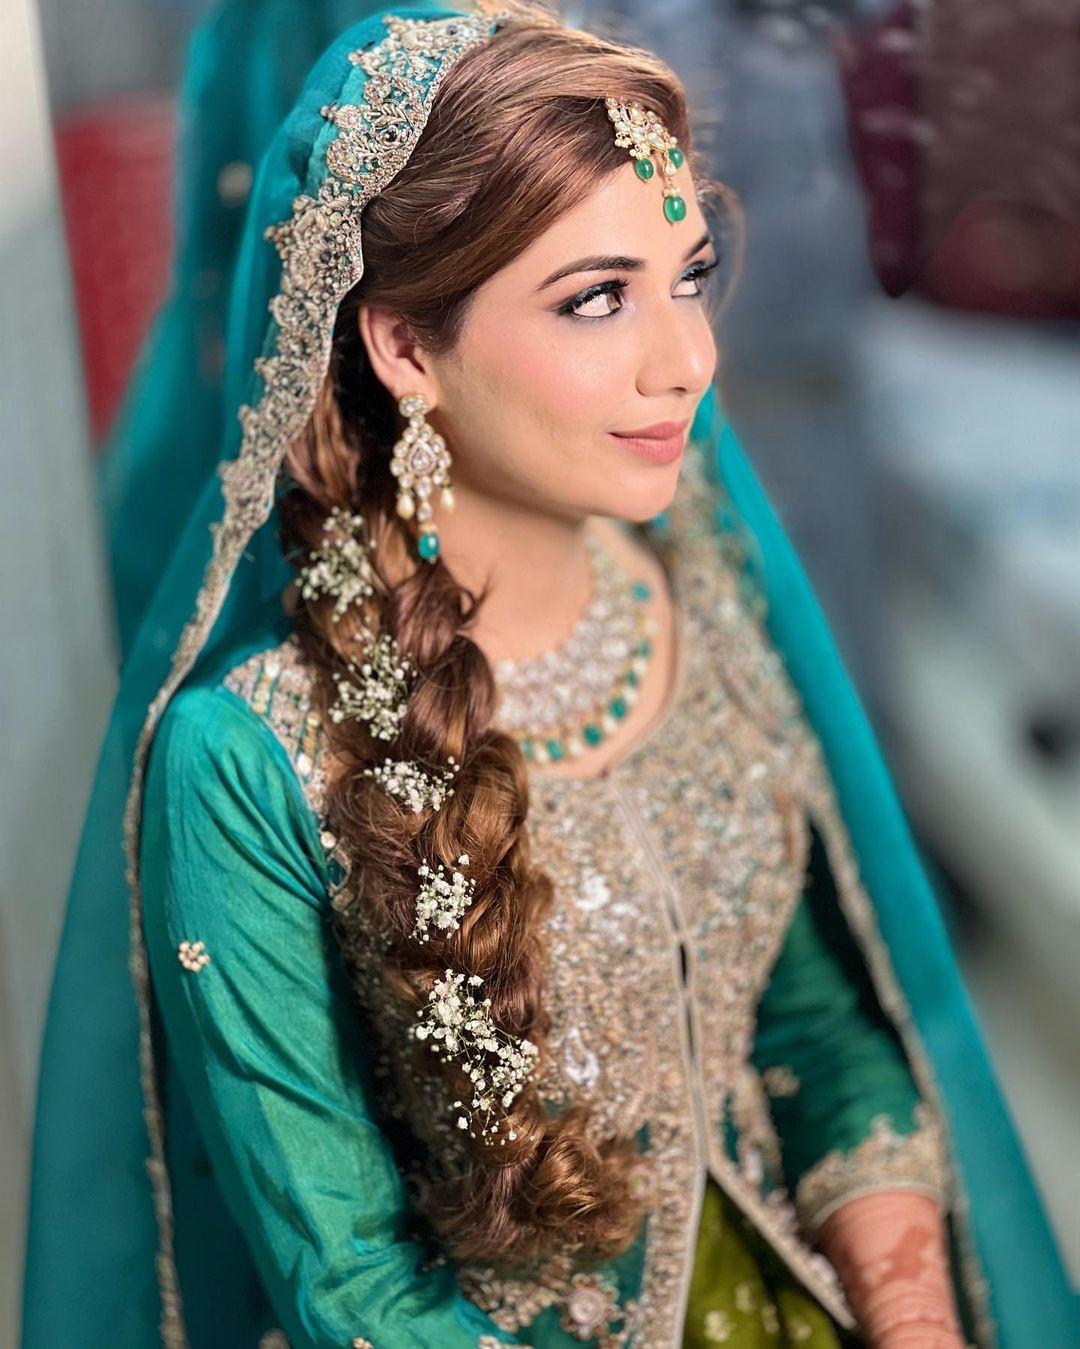 6 Braided Hairstyles That Look Ah-mazing With Your Wedding Mehndi Look! |  Bridal Look | Wedding Blog